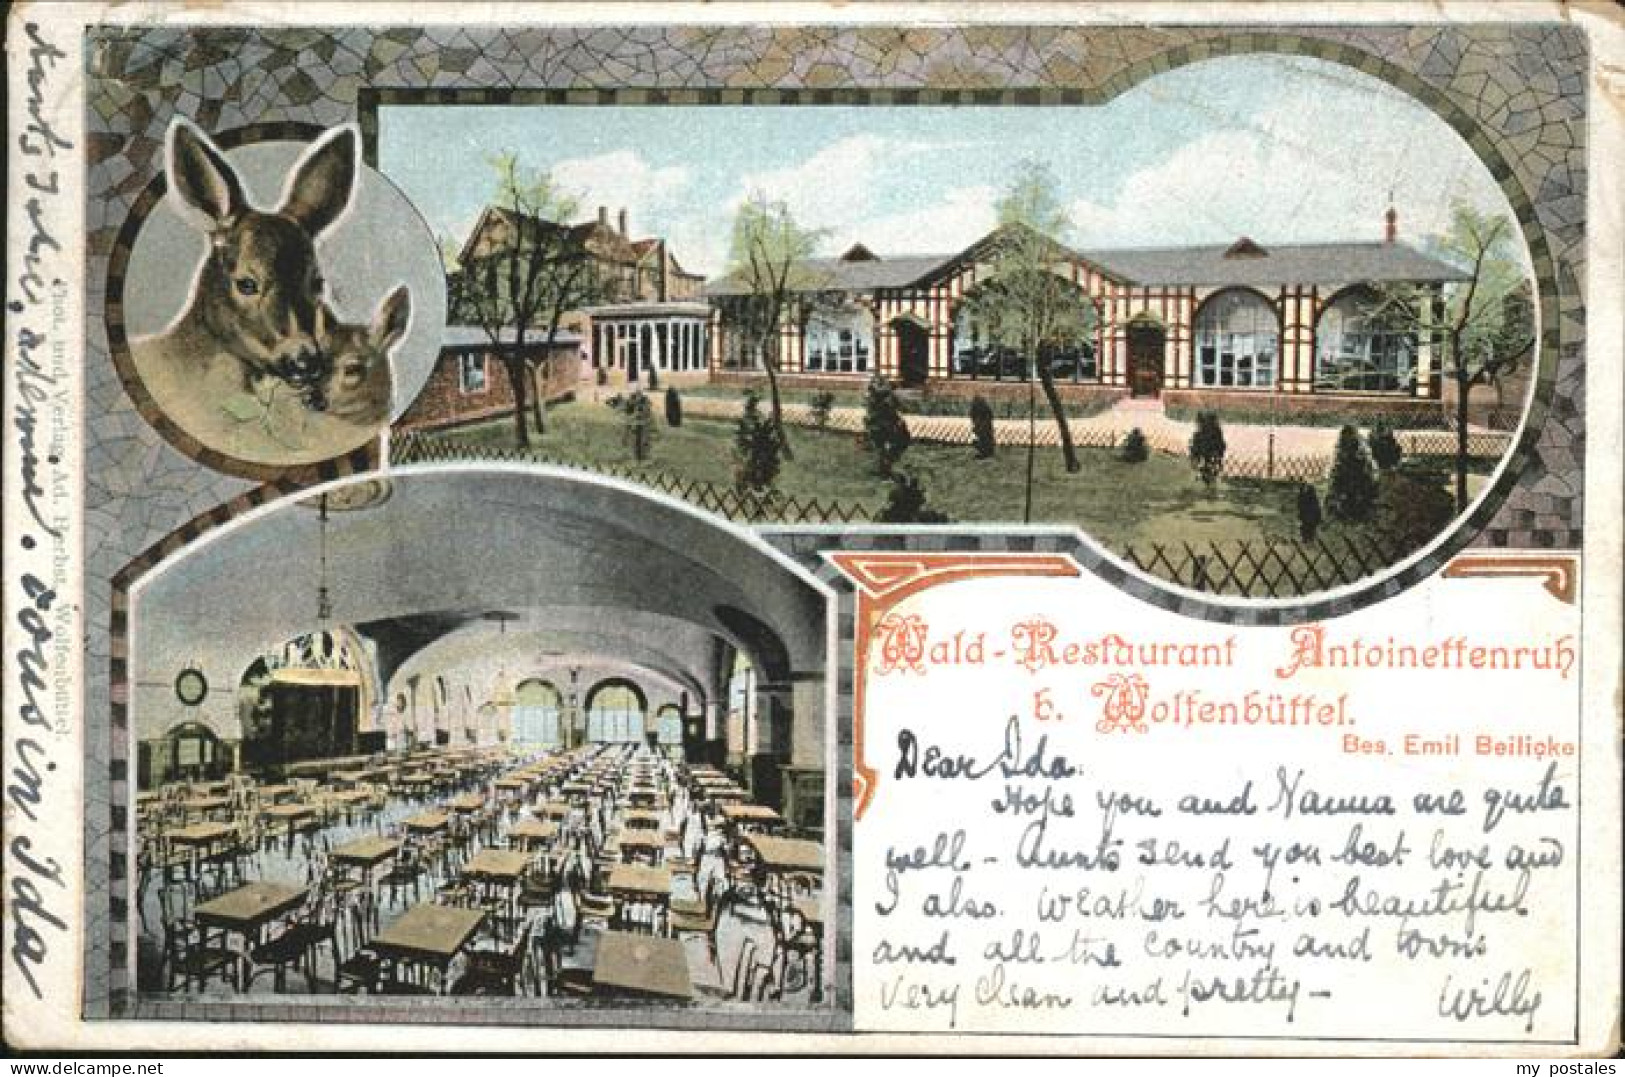 41334171 Wolfenbuettel Wald-Restaurant Antoinettenruh Wolfenbuettel - Wolfenbuettel